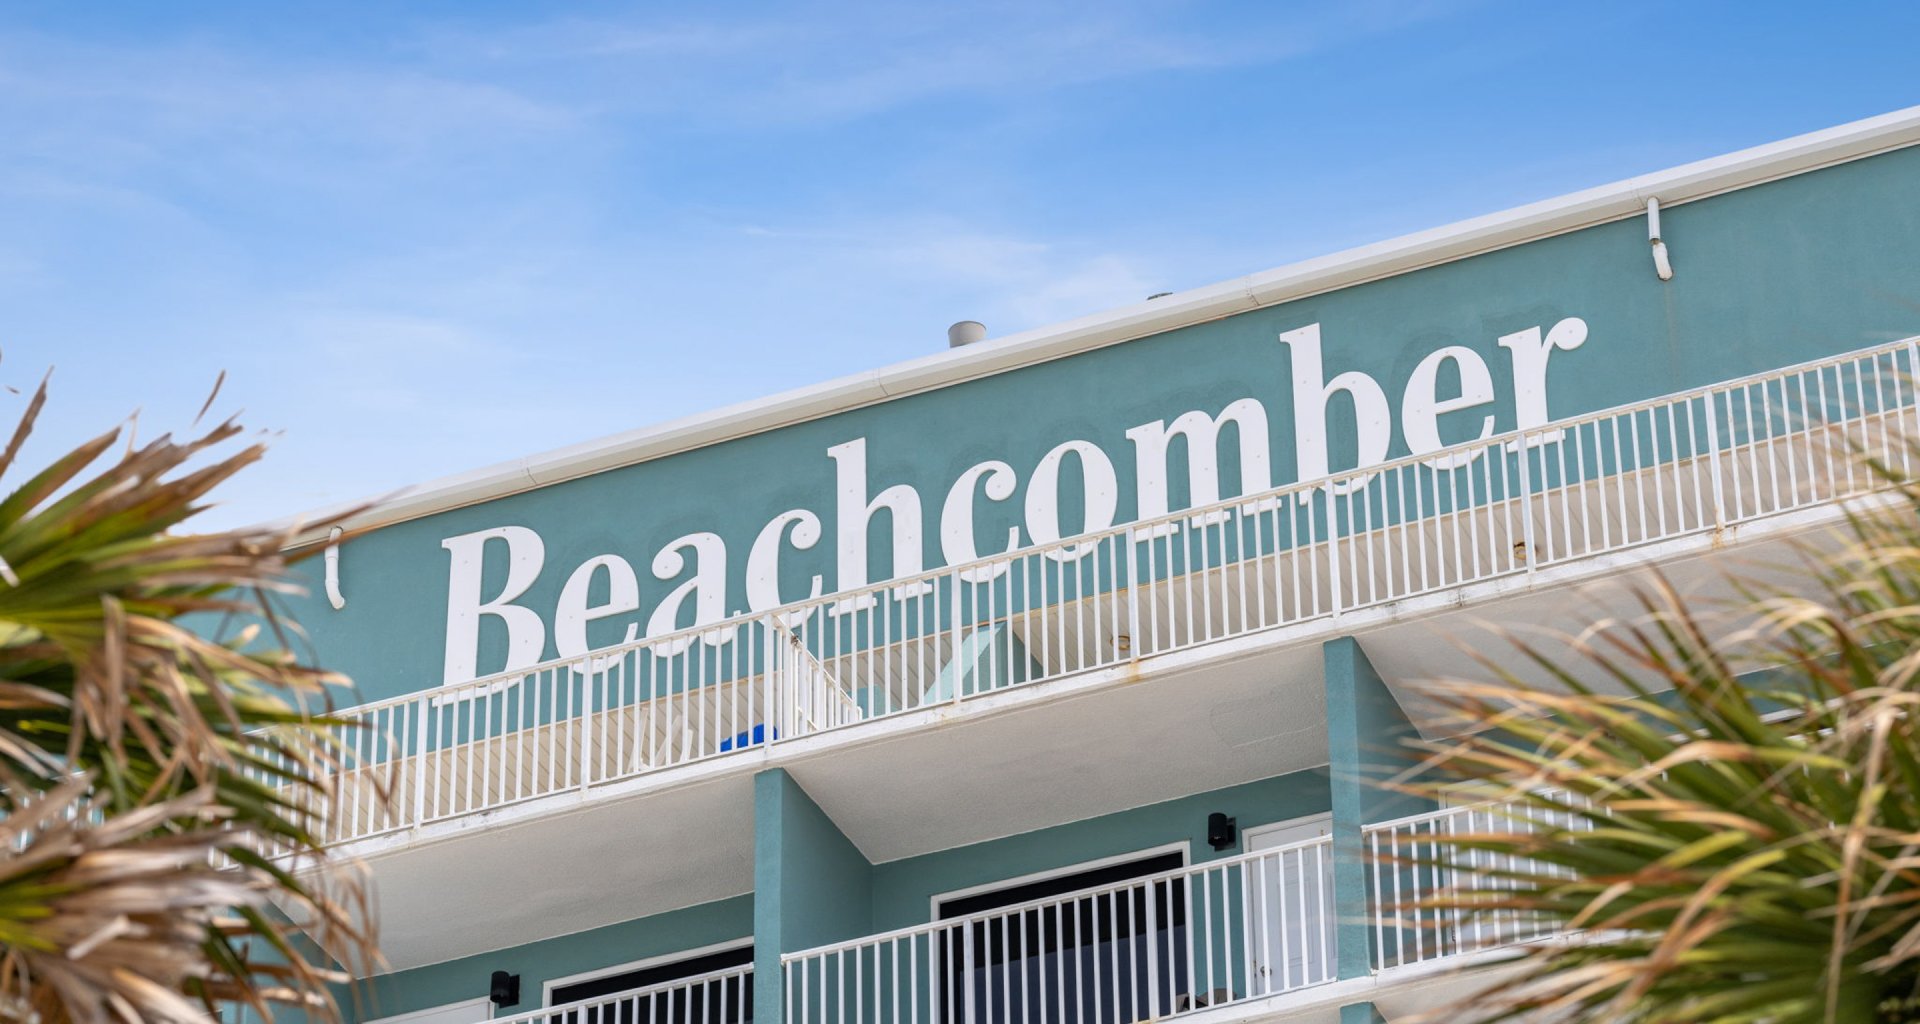 Front View of Beachcomber Beachfront Hotel, Florida